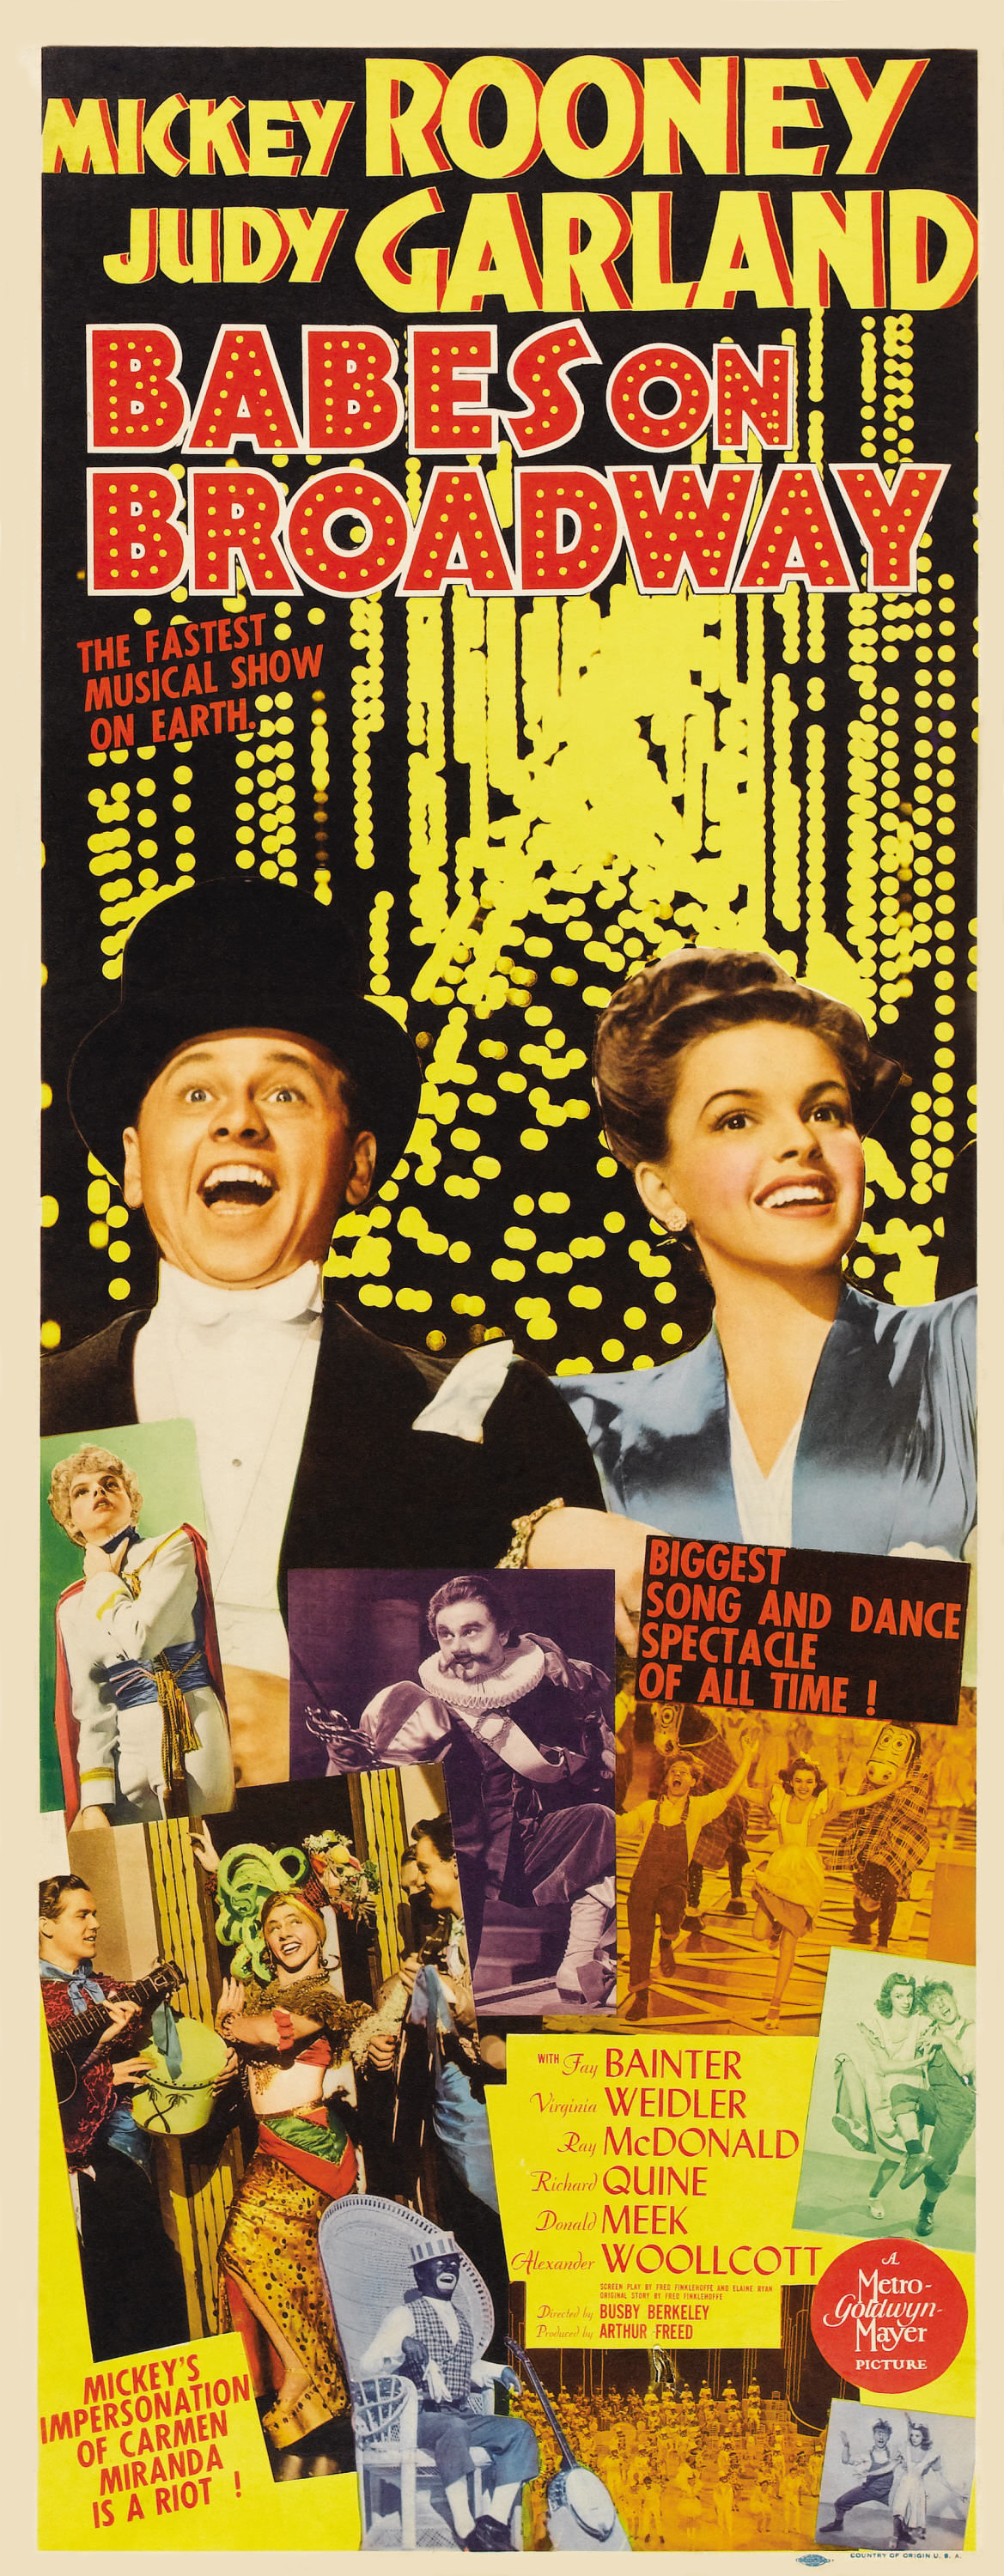 Mickey Rooney در صحنه فیلم سینمایی Babes on Broadway به همراه جودی گارلند